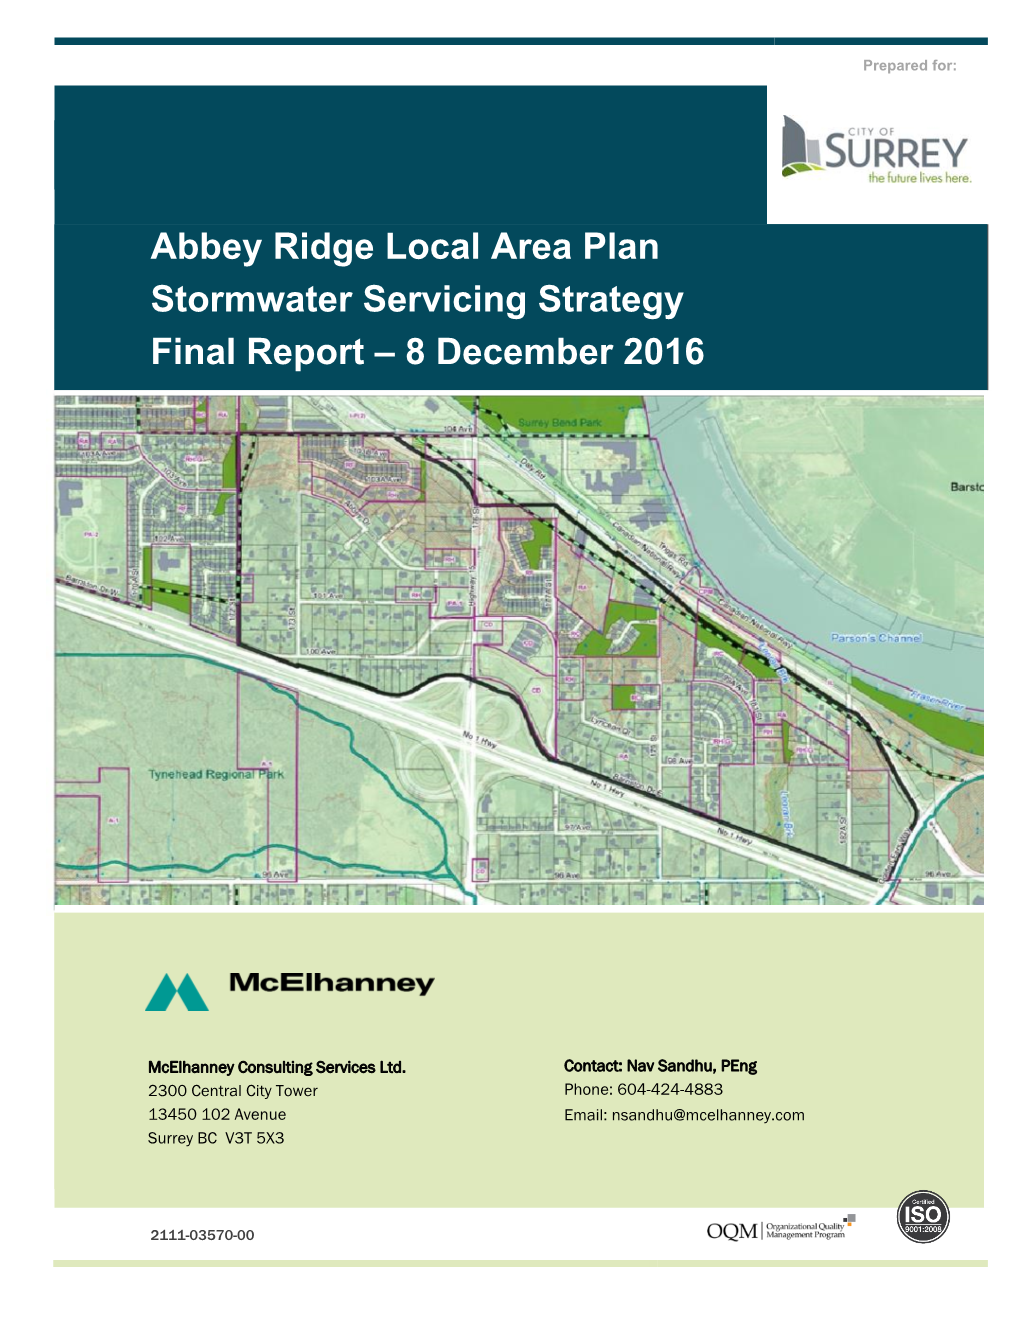 Abbey Ridge Stormwater Servicing Strategy Final